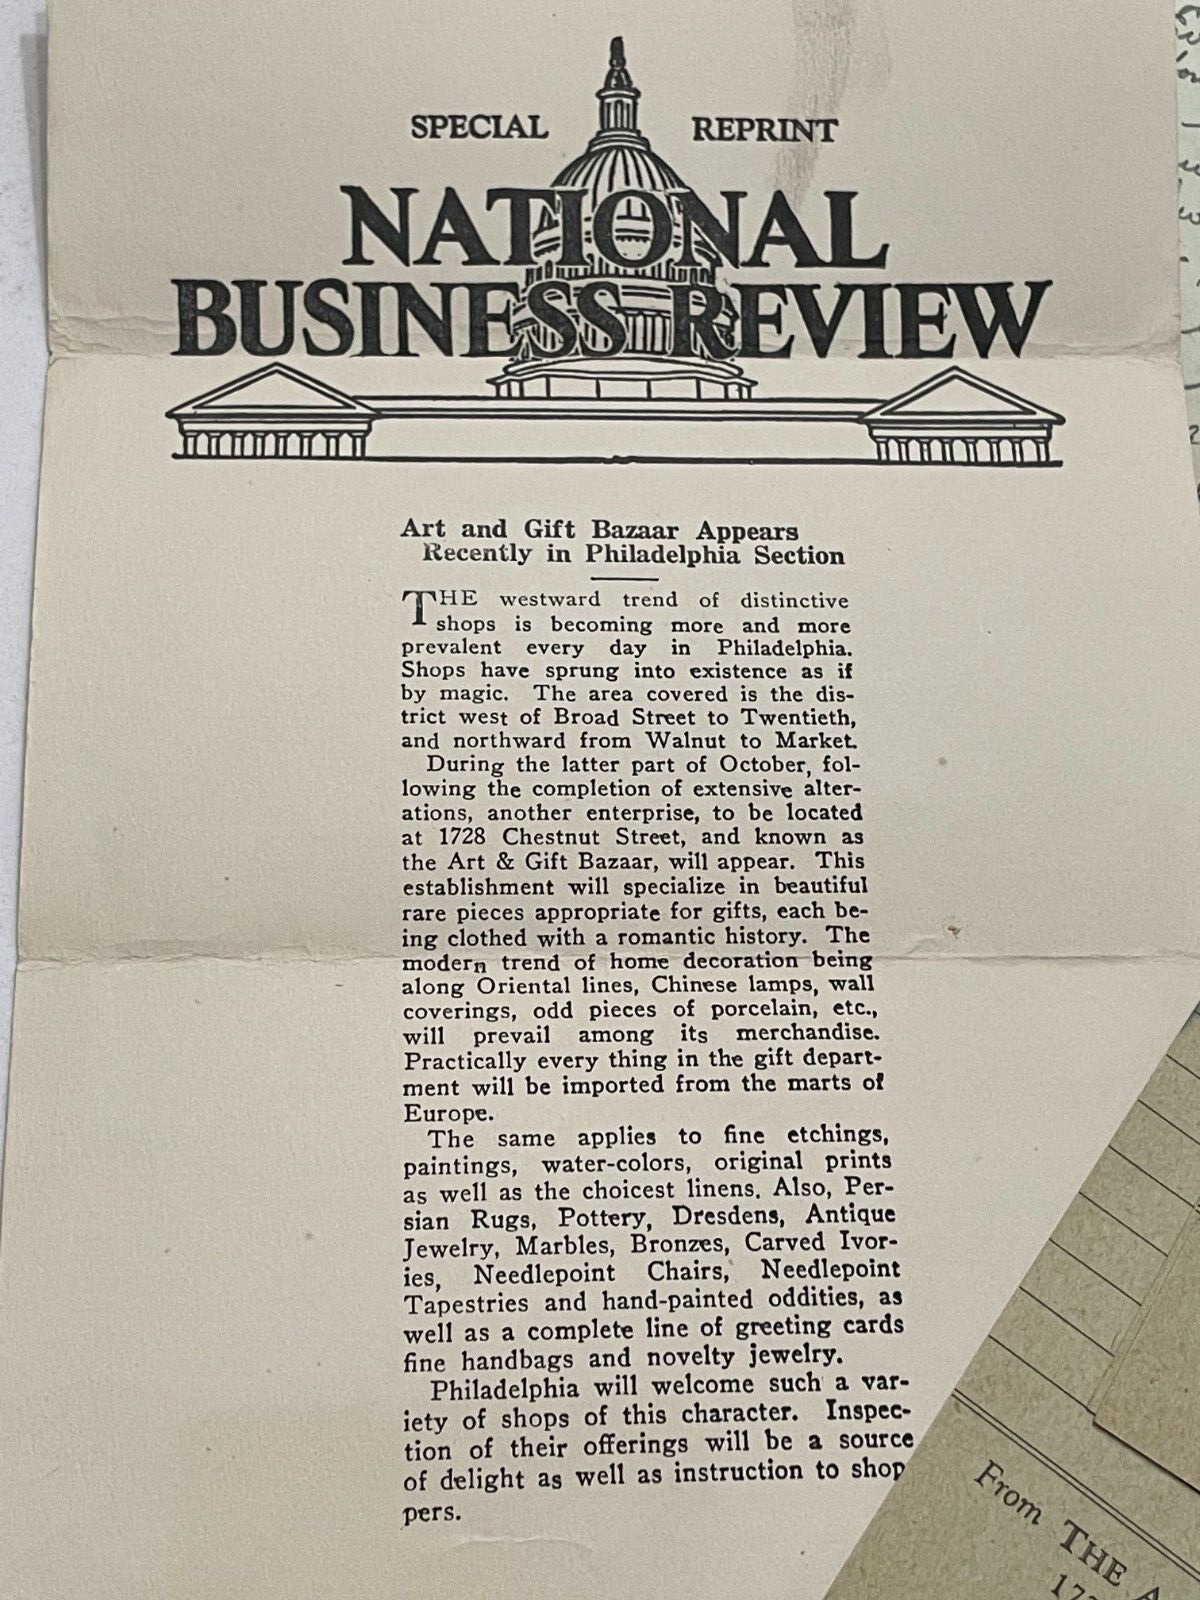 Vintage Press Release re: The Art & Gift Bazzar Philadelphia Gif Shop 1928